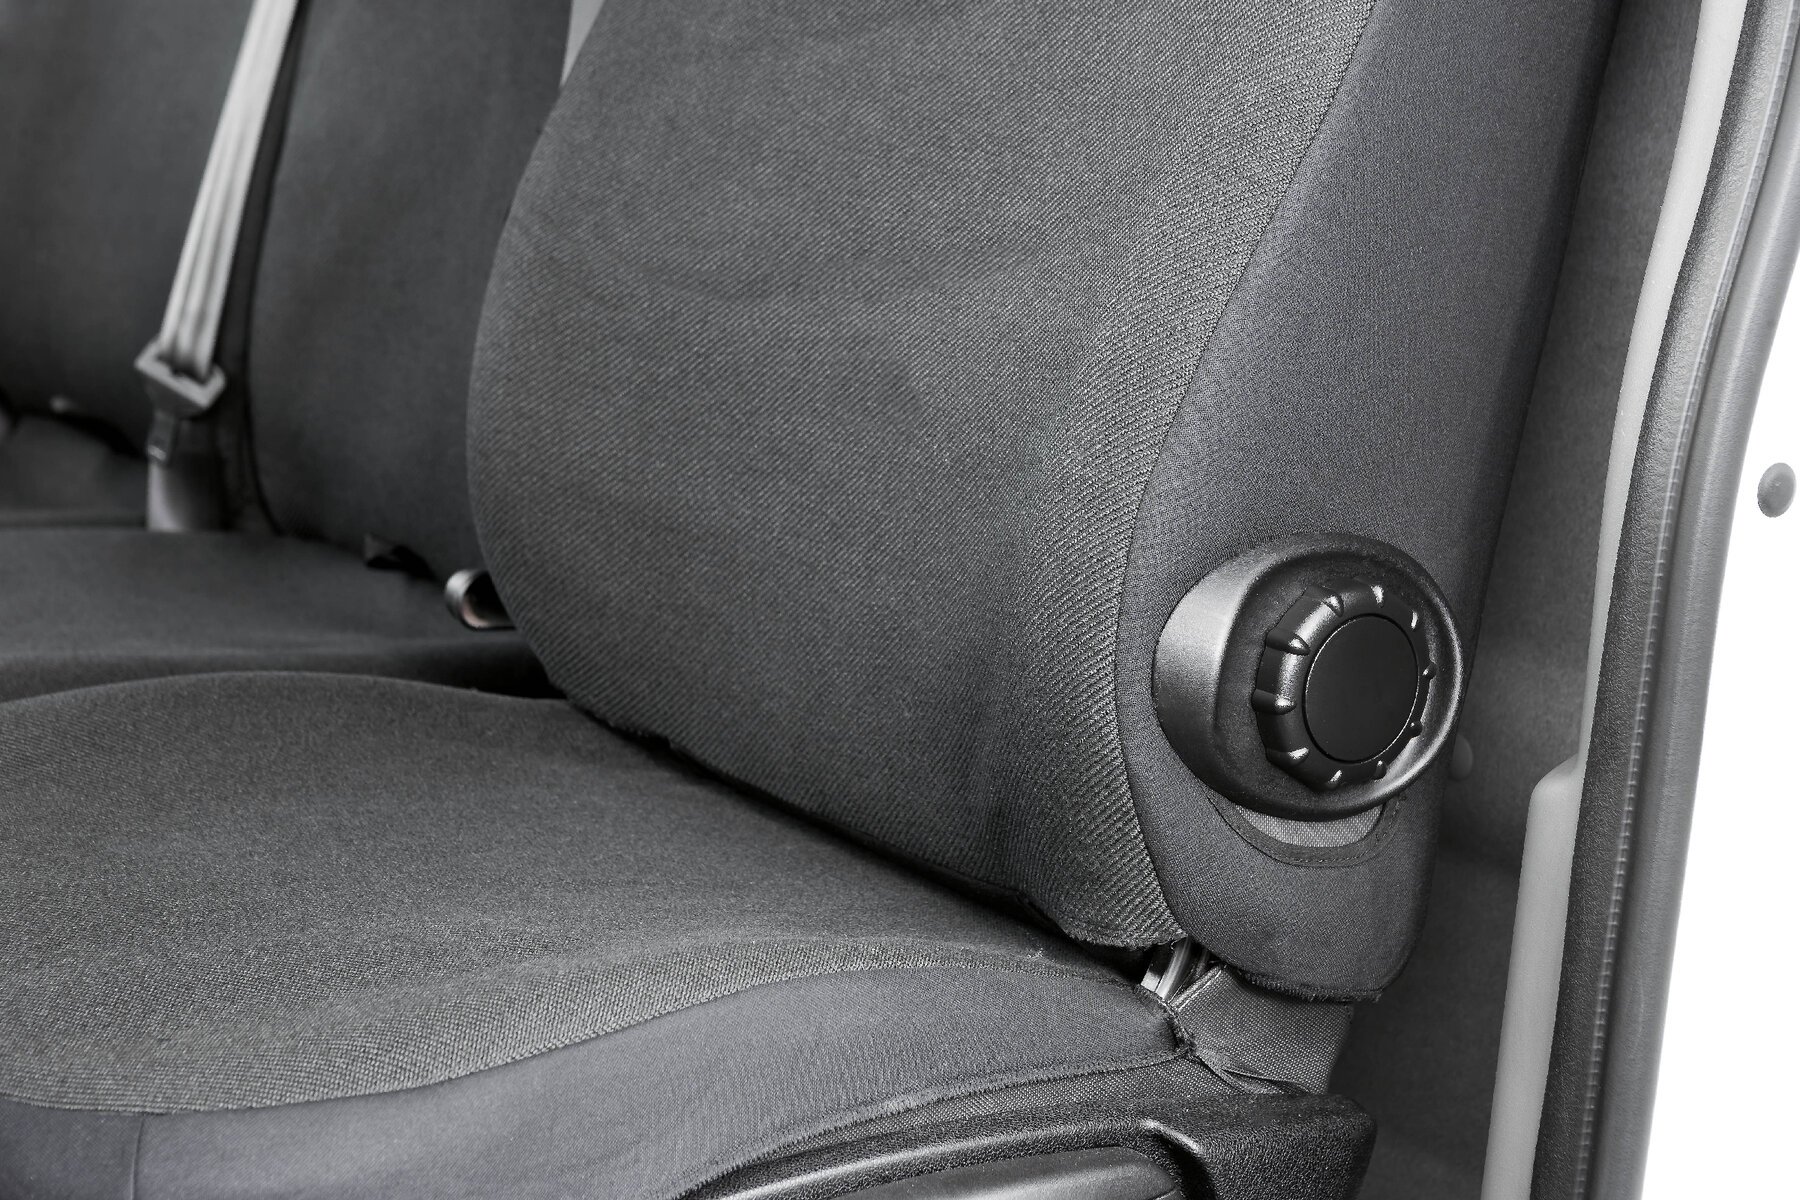 Housse de siège Transporter en tissu pour Opel Movano, Renault Master, Nissan Interstar, siège simple et double